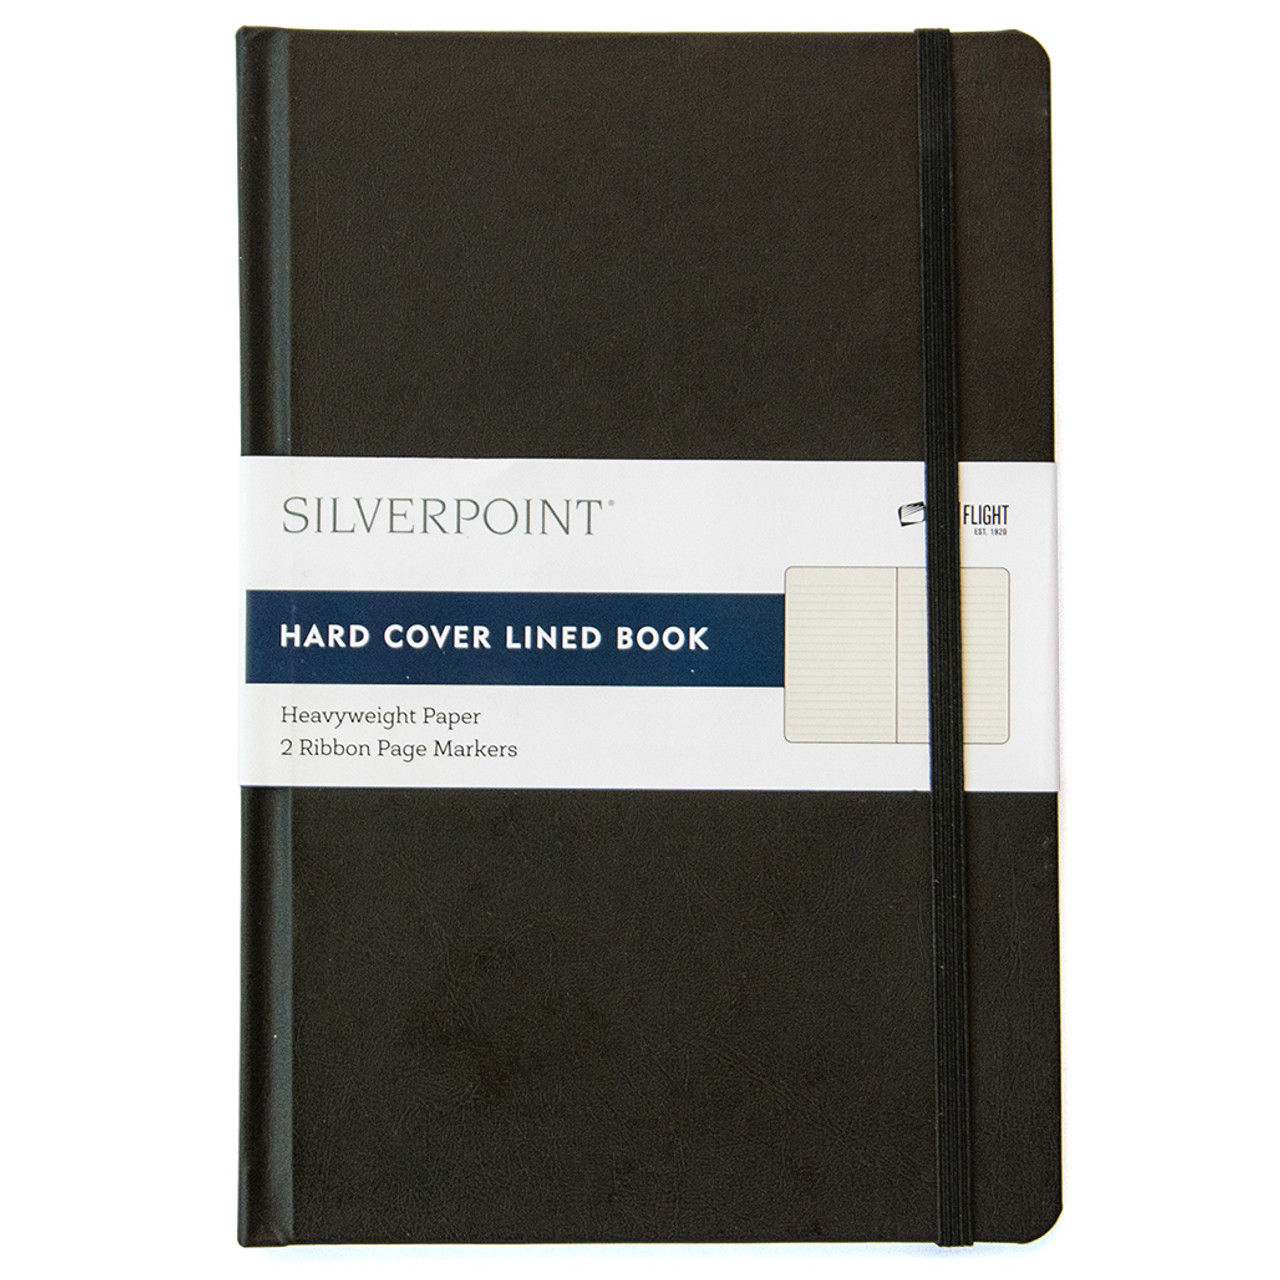 Black Paper Notebook Sketchbook, Hardcover Journal With Black